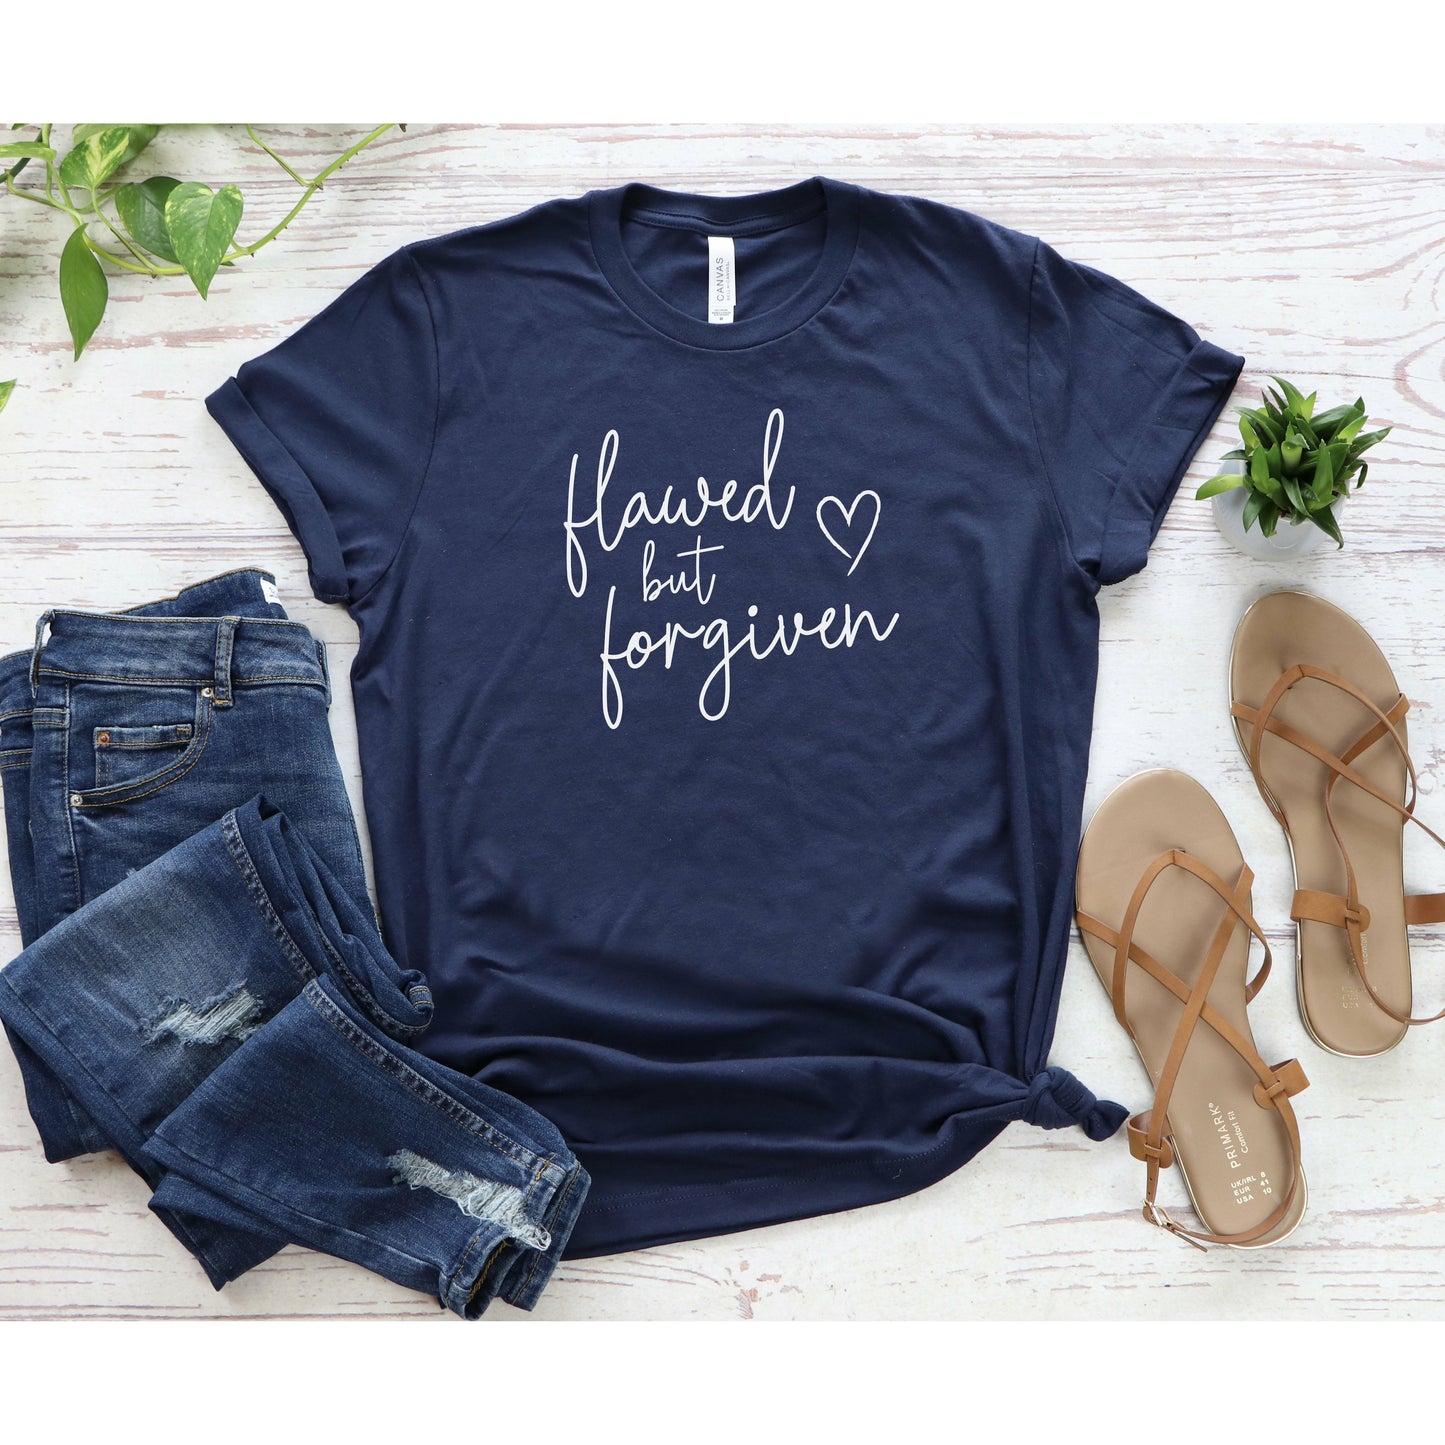 Flawed But Forgiven | Faith Shirt for Women